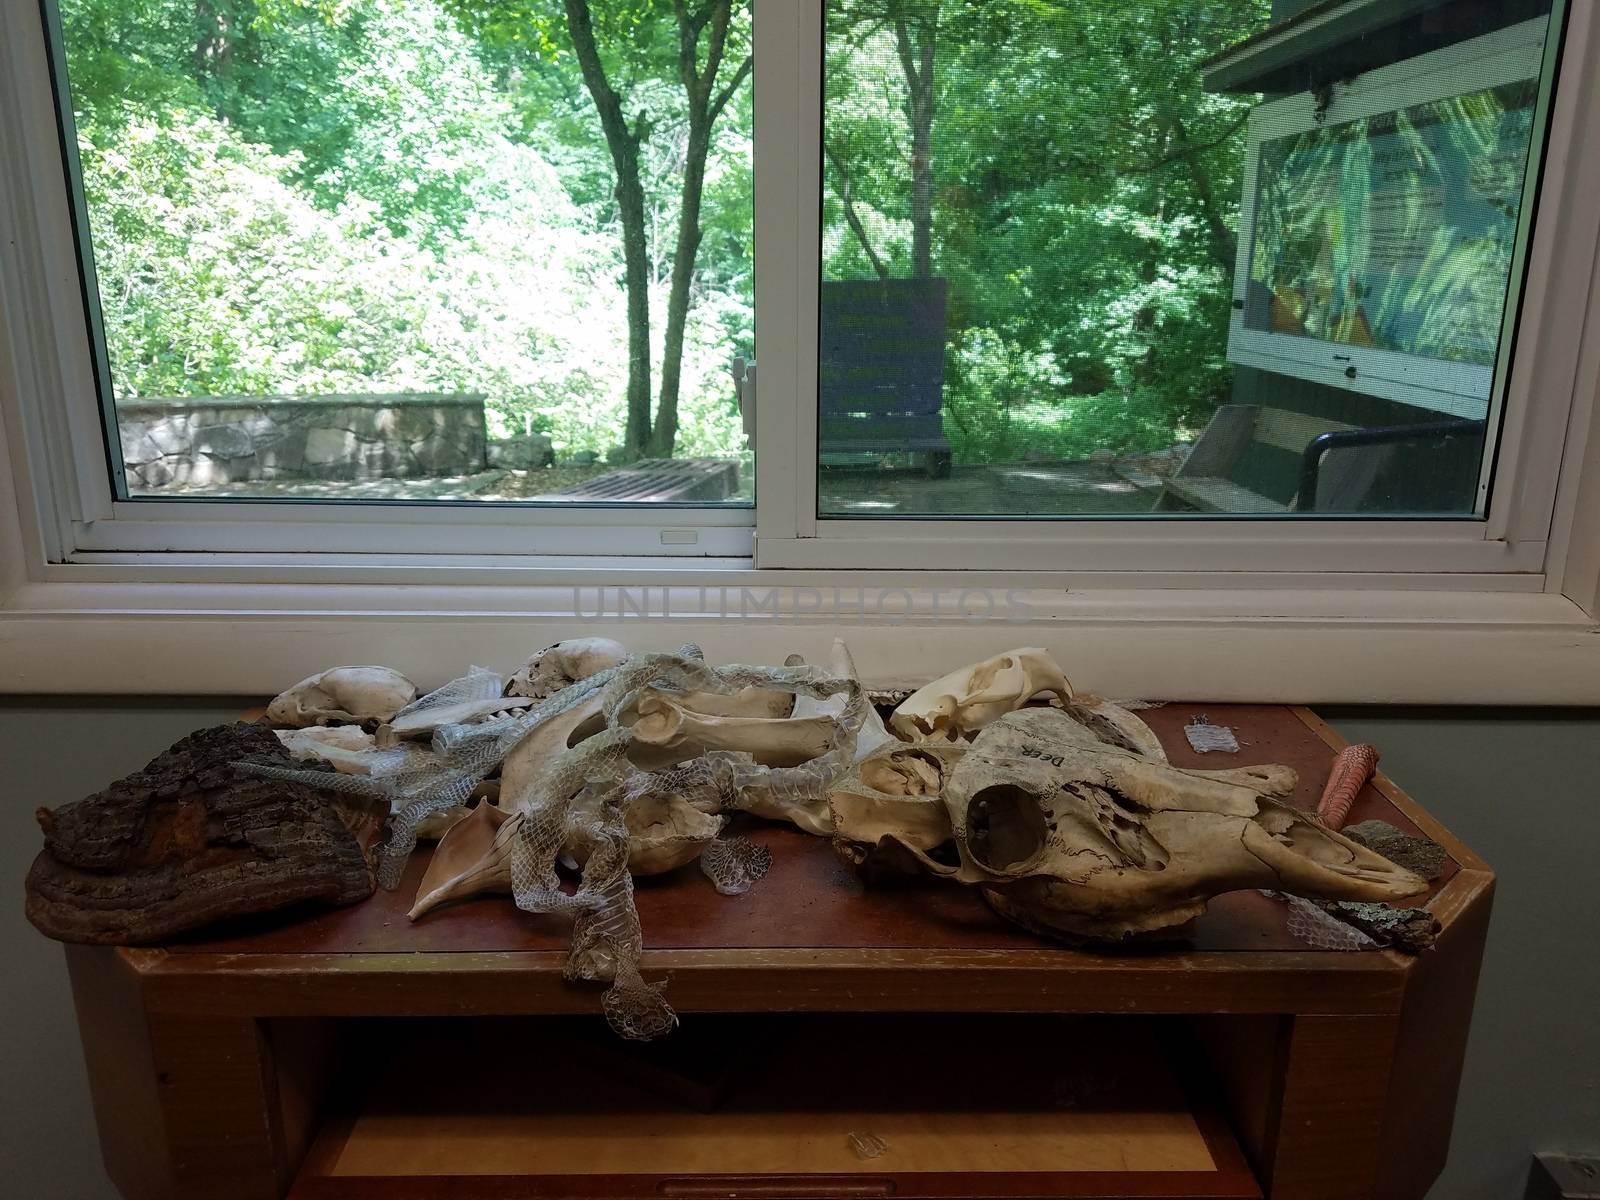 deer skull and snake skin on wood table near window